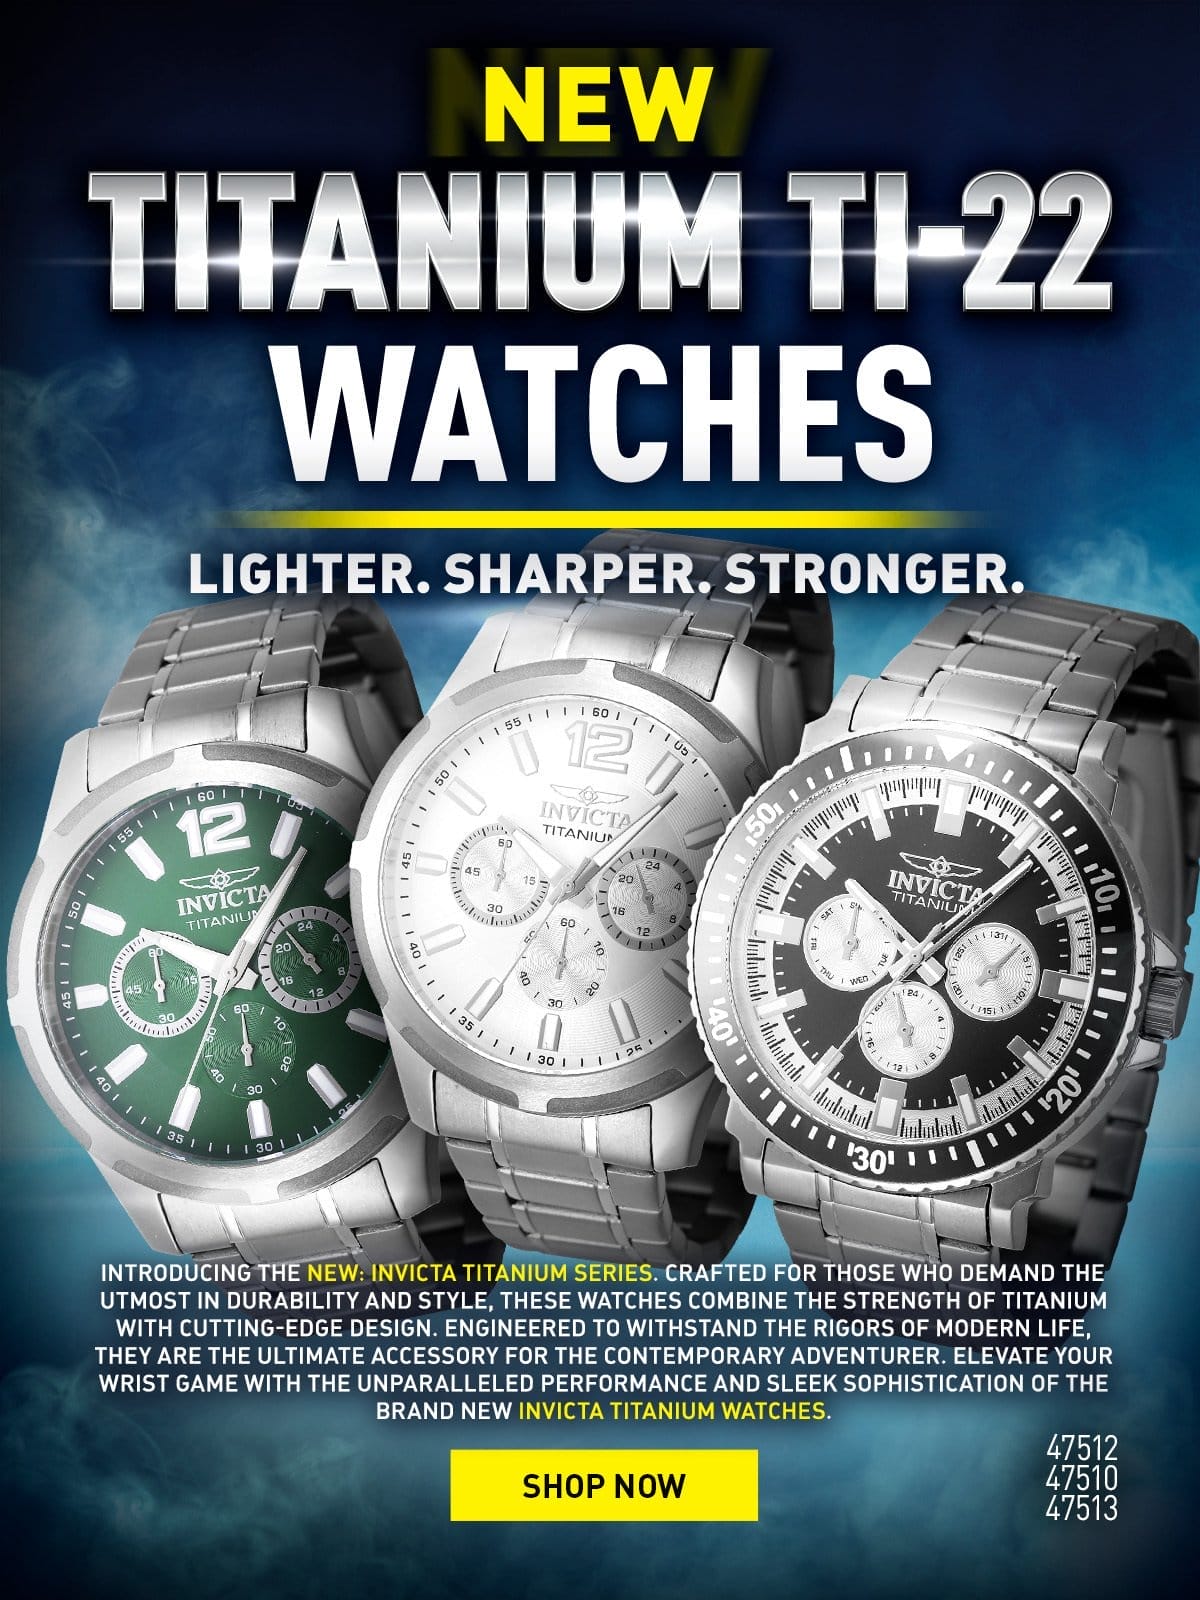 New Titanium TI-22 Watches - Lighter. Sharper. Stronger.